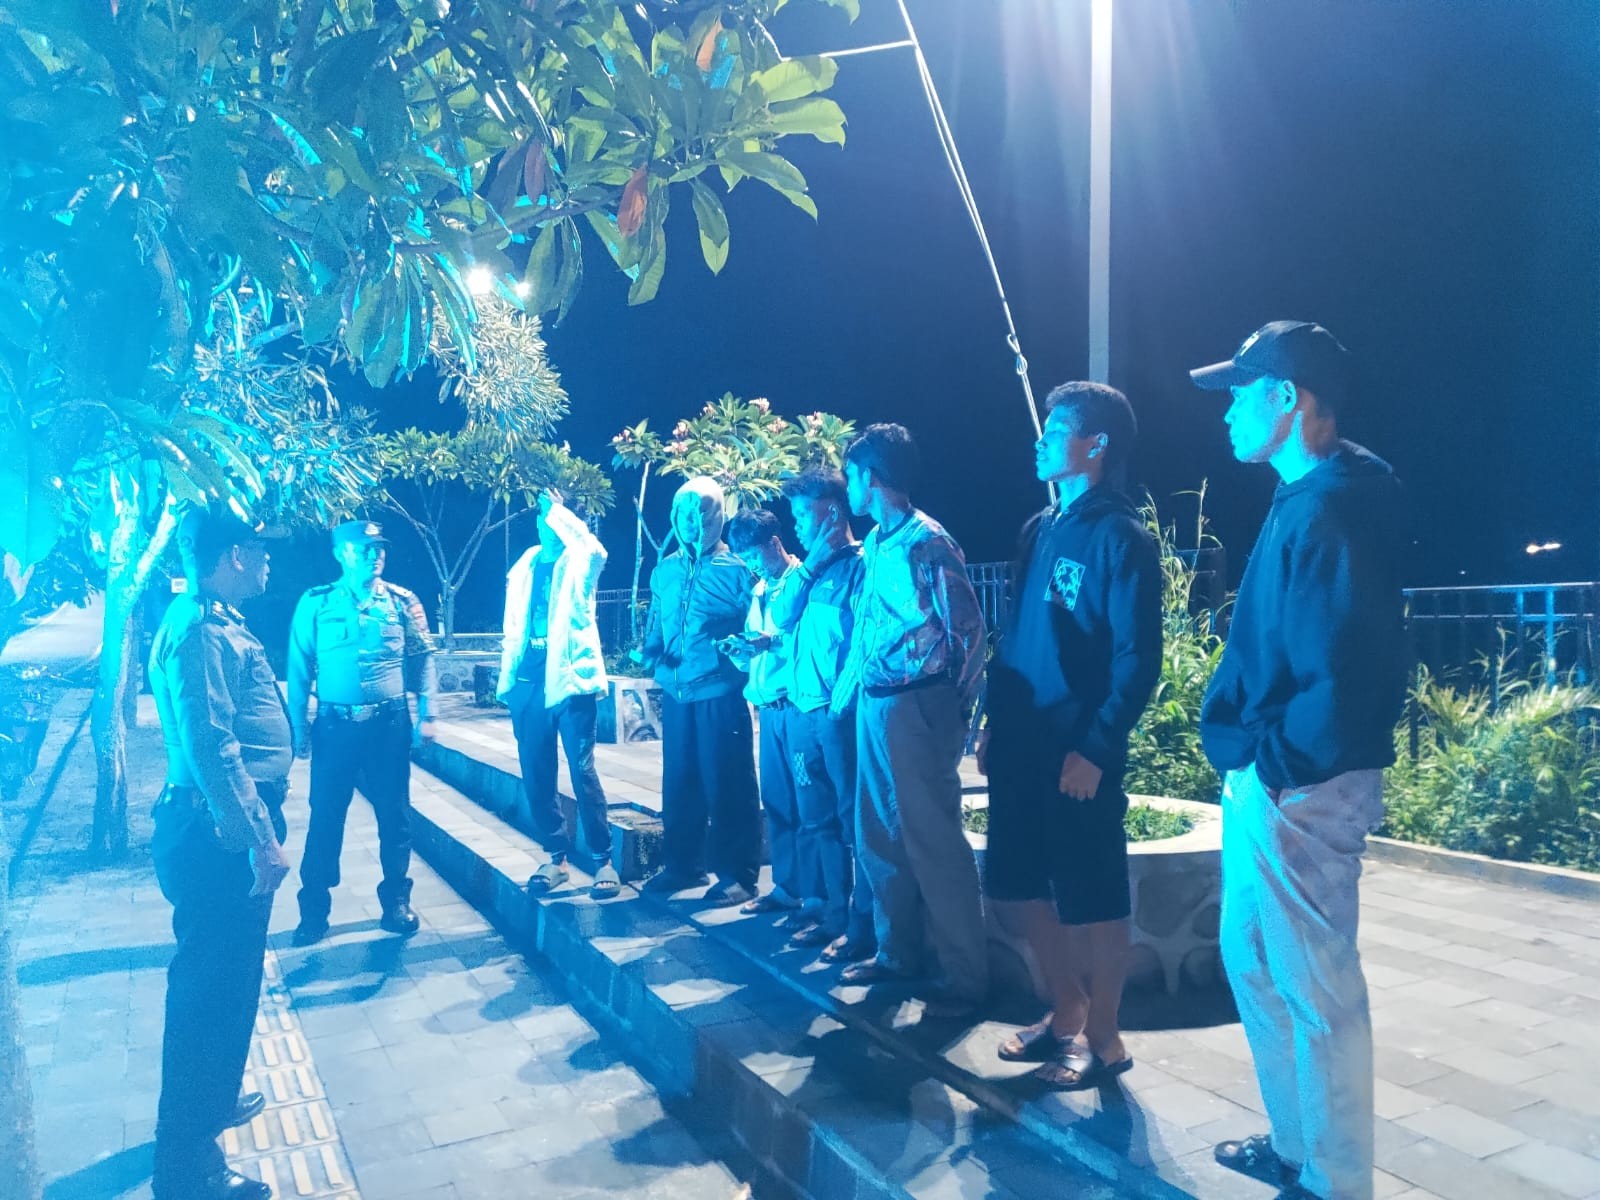 Polsek Parapat Resor Simalungun Gelar Blue Light Patrol untuk Antisipasi Kejahatan dan Balap Liar